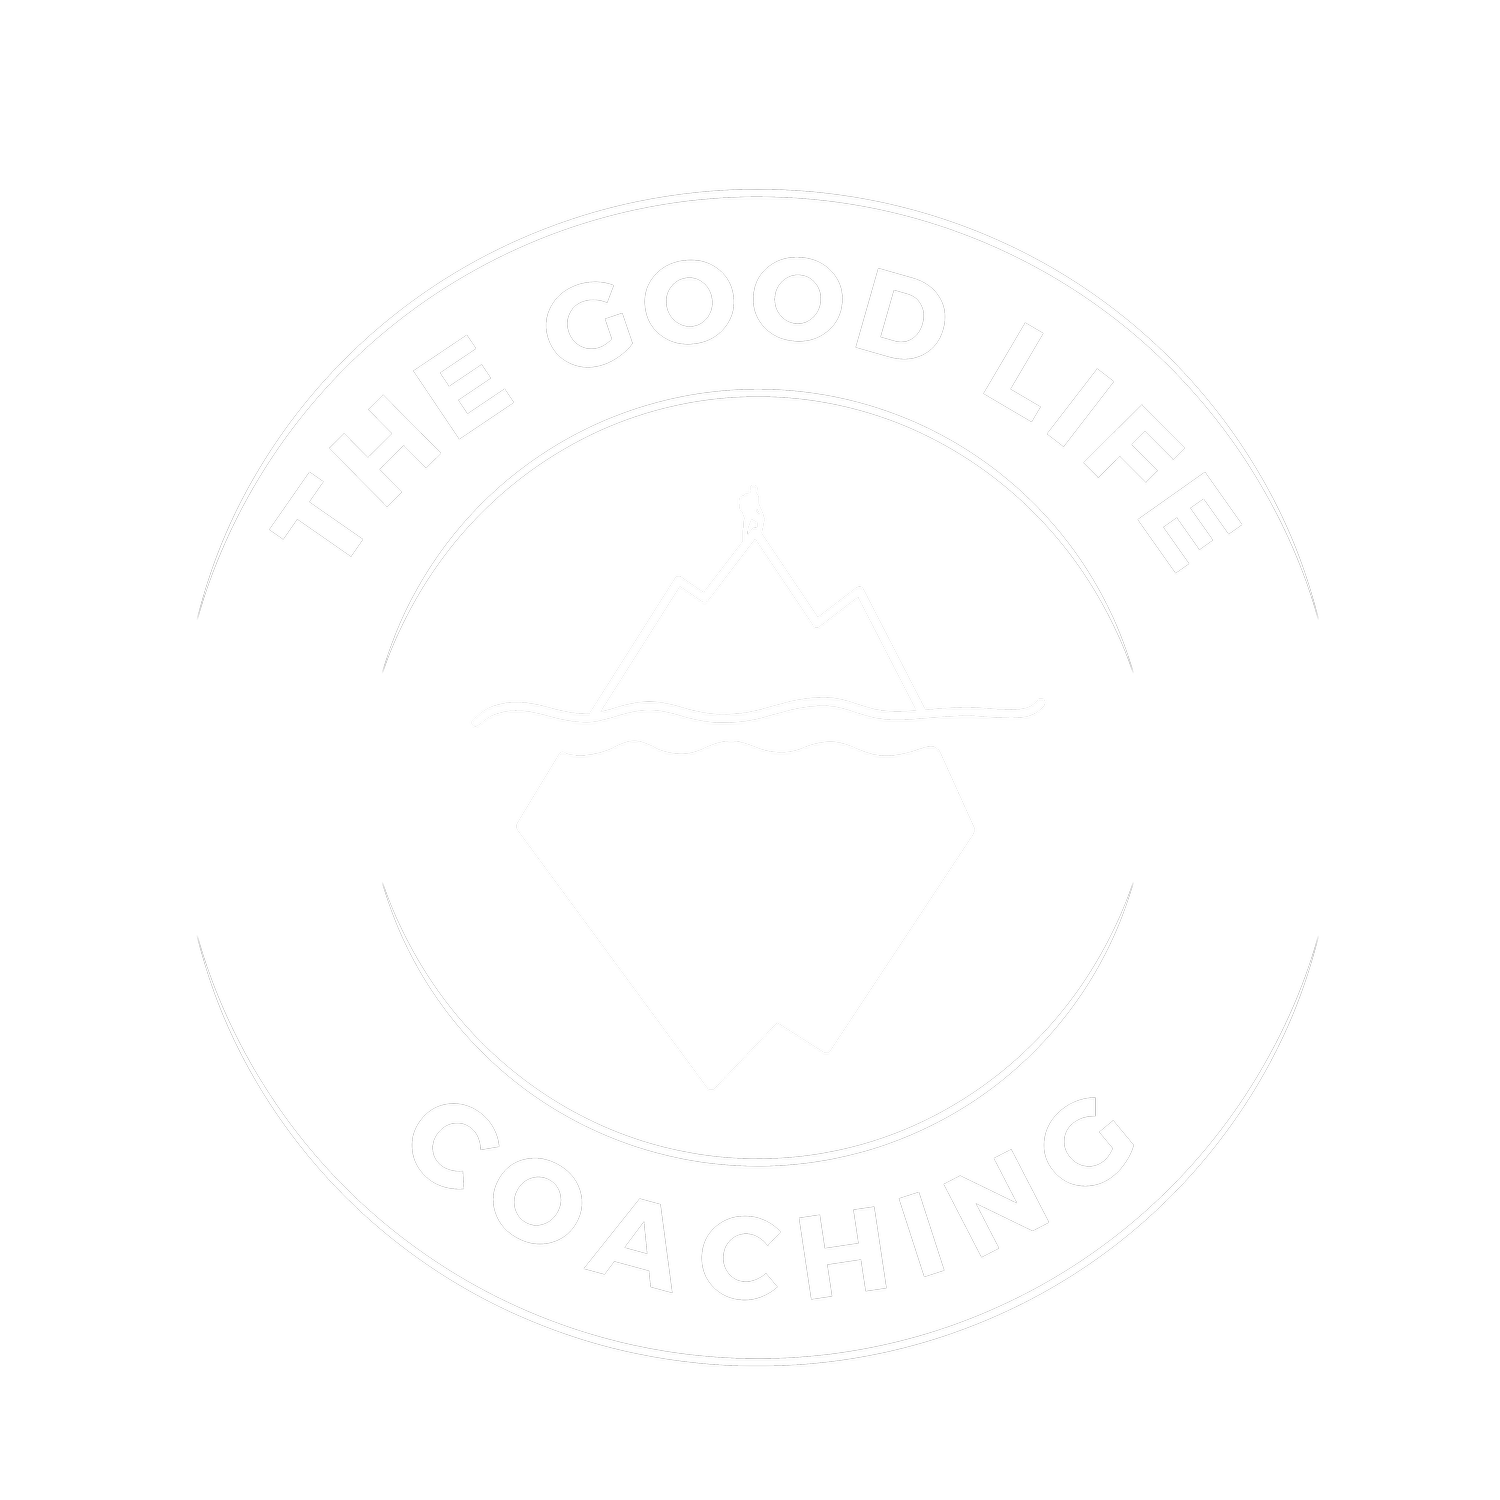 The Good Life Coaching